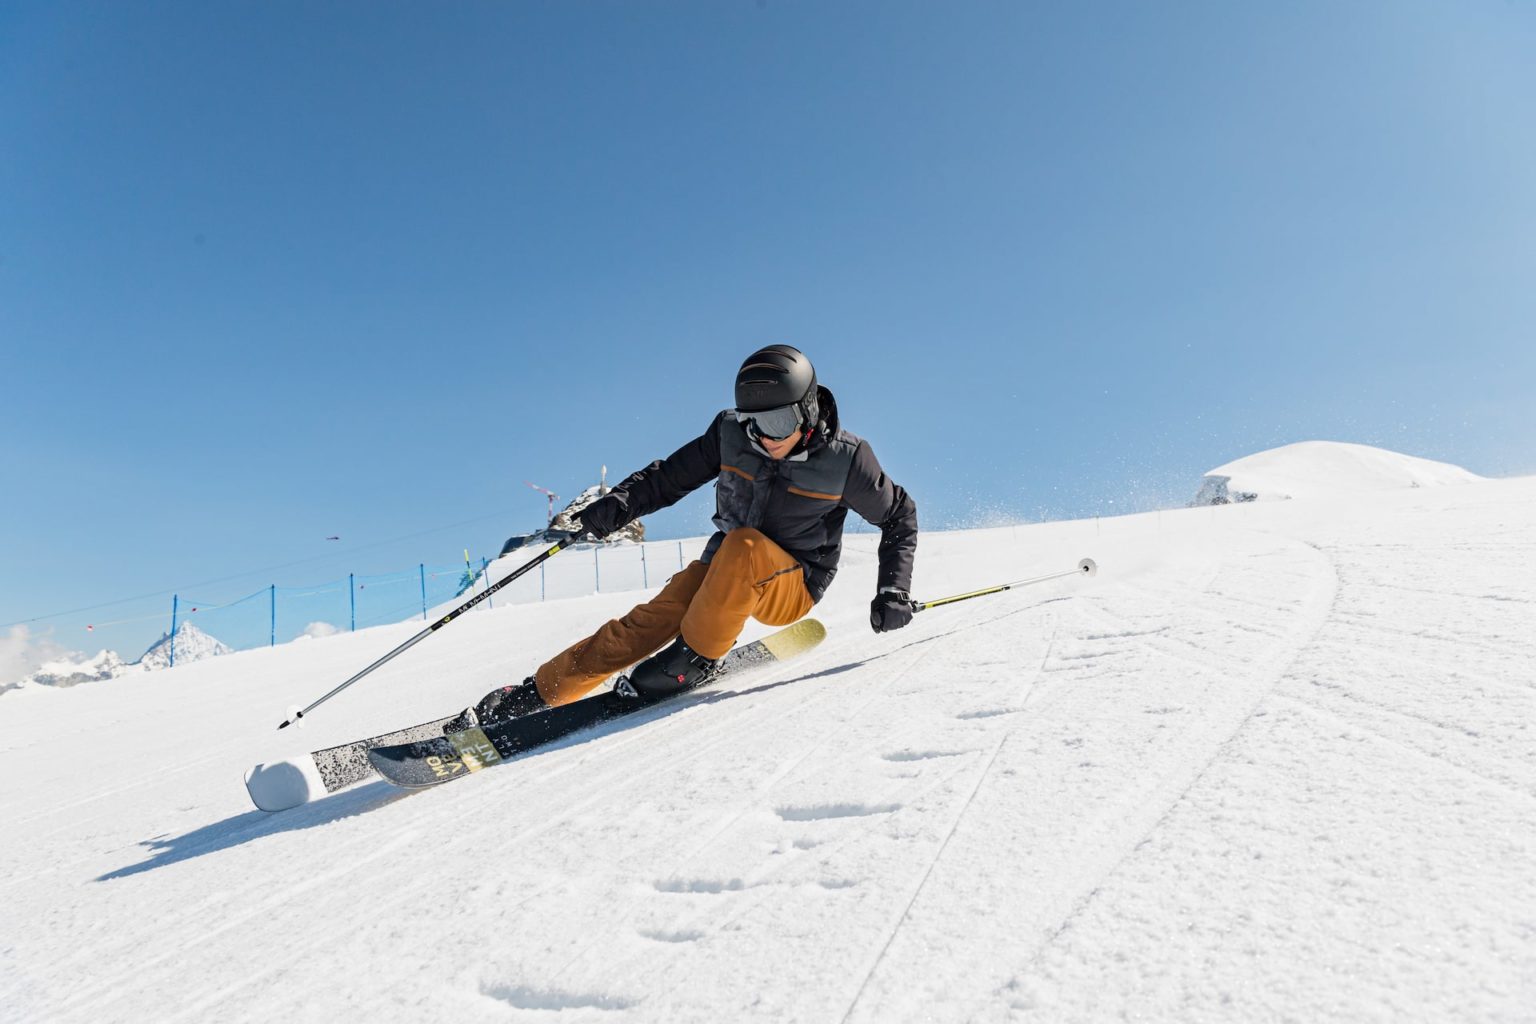 skieur en descente sur une piste de ski